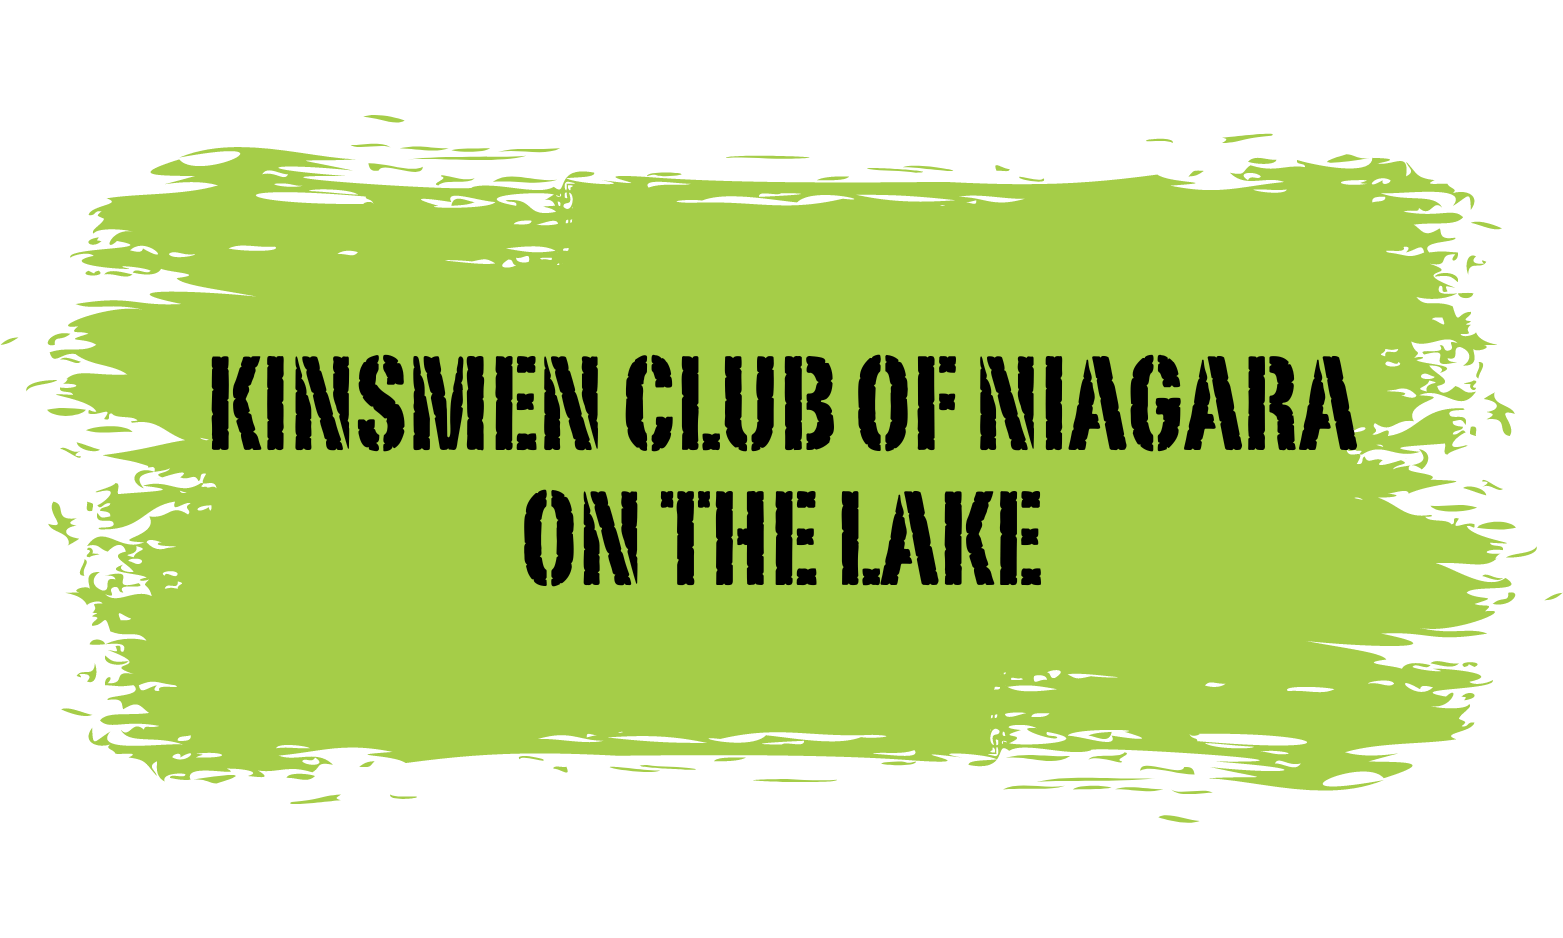 Kinsmen club of Niagara on the lake